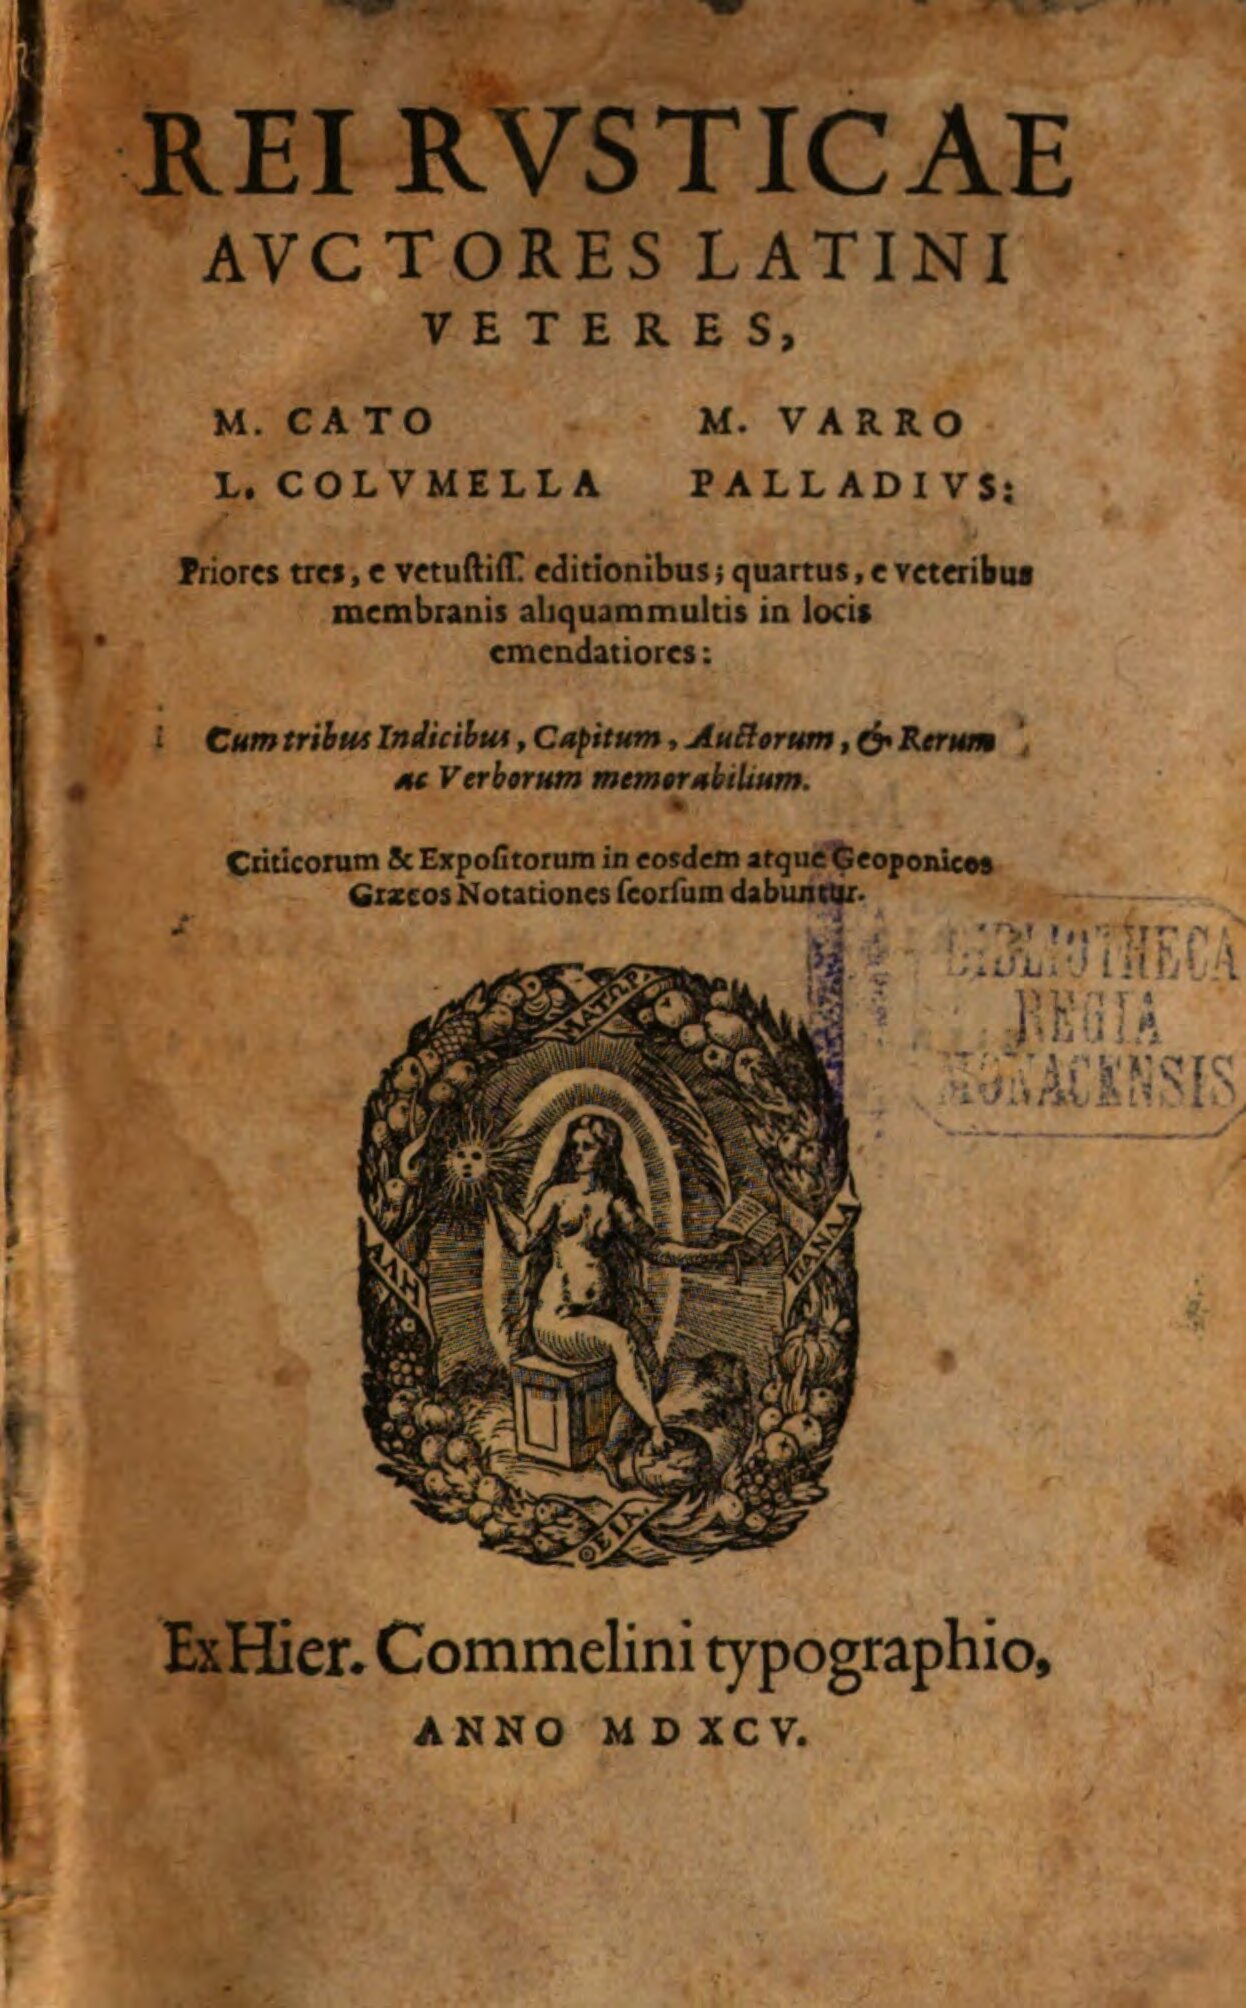 Titelseite von "Rei Rvsticae Avctores Latini Veteres," mit Illustration.